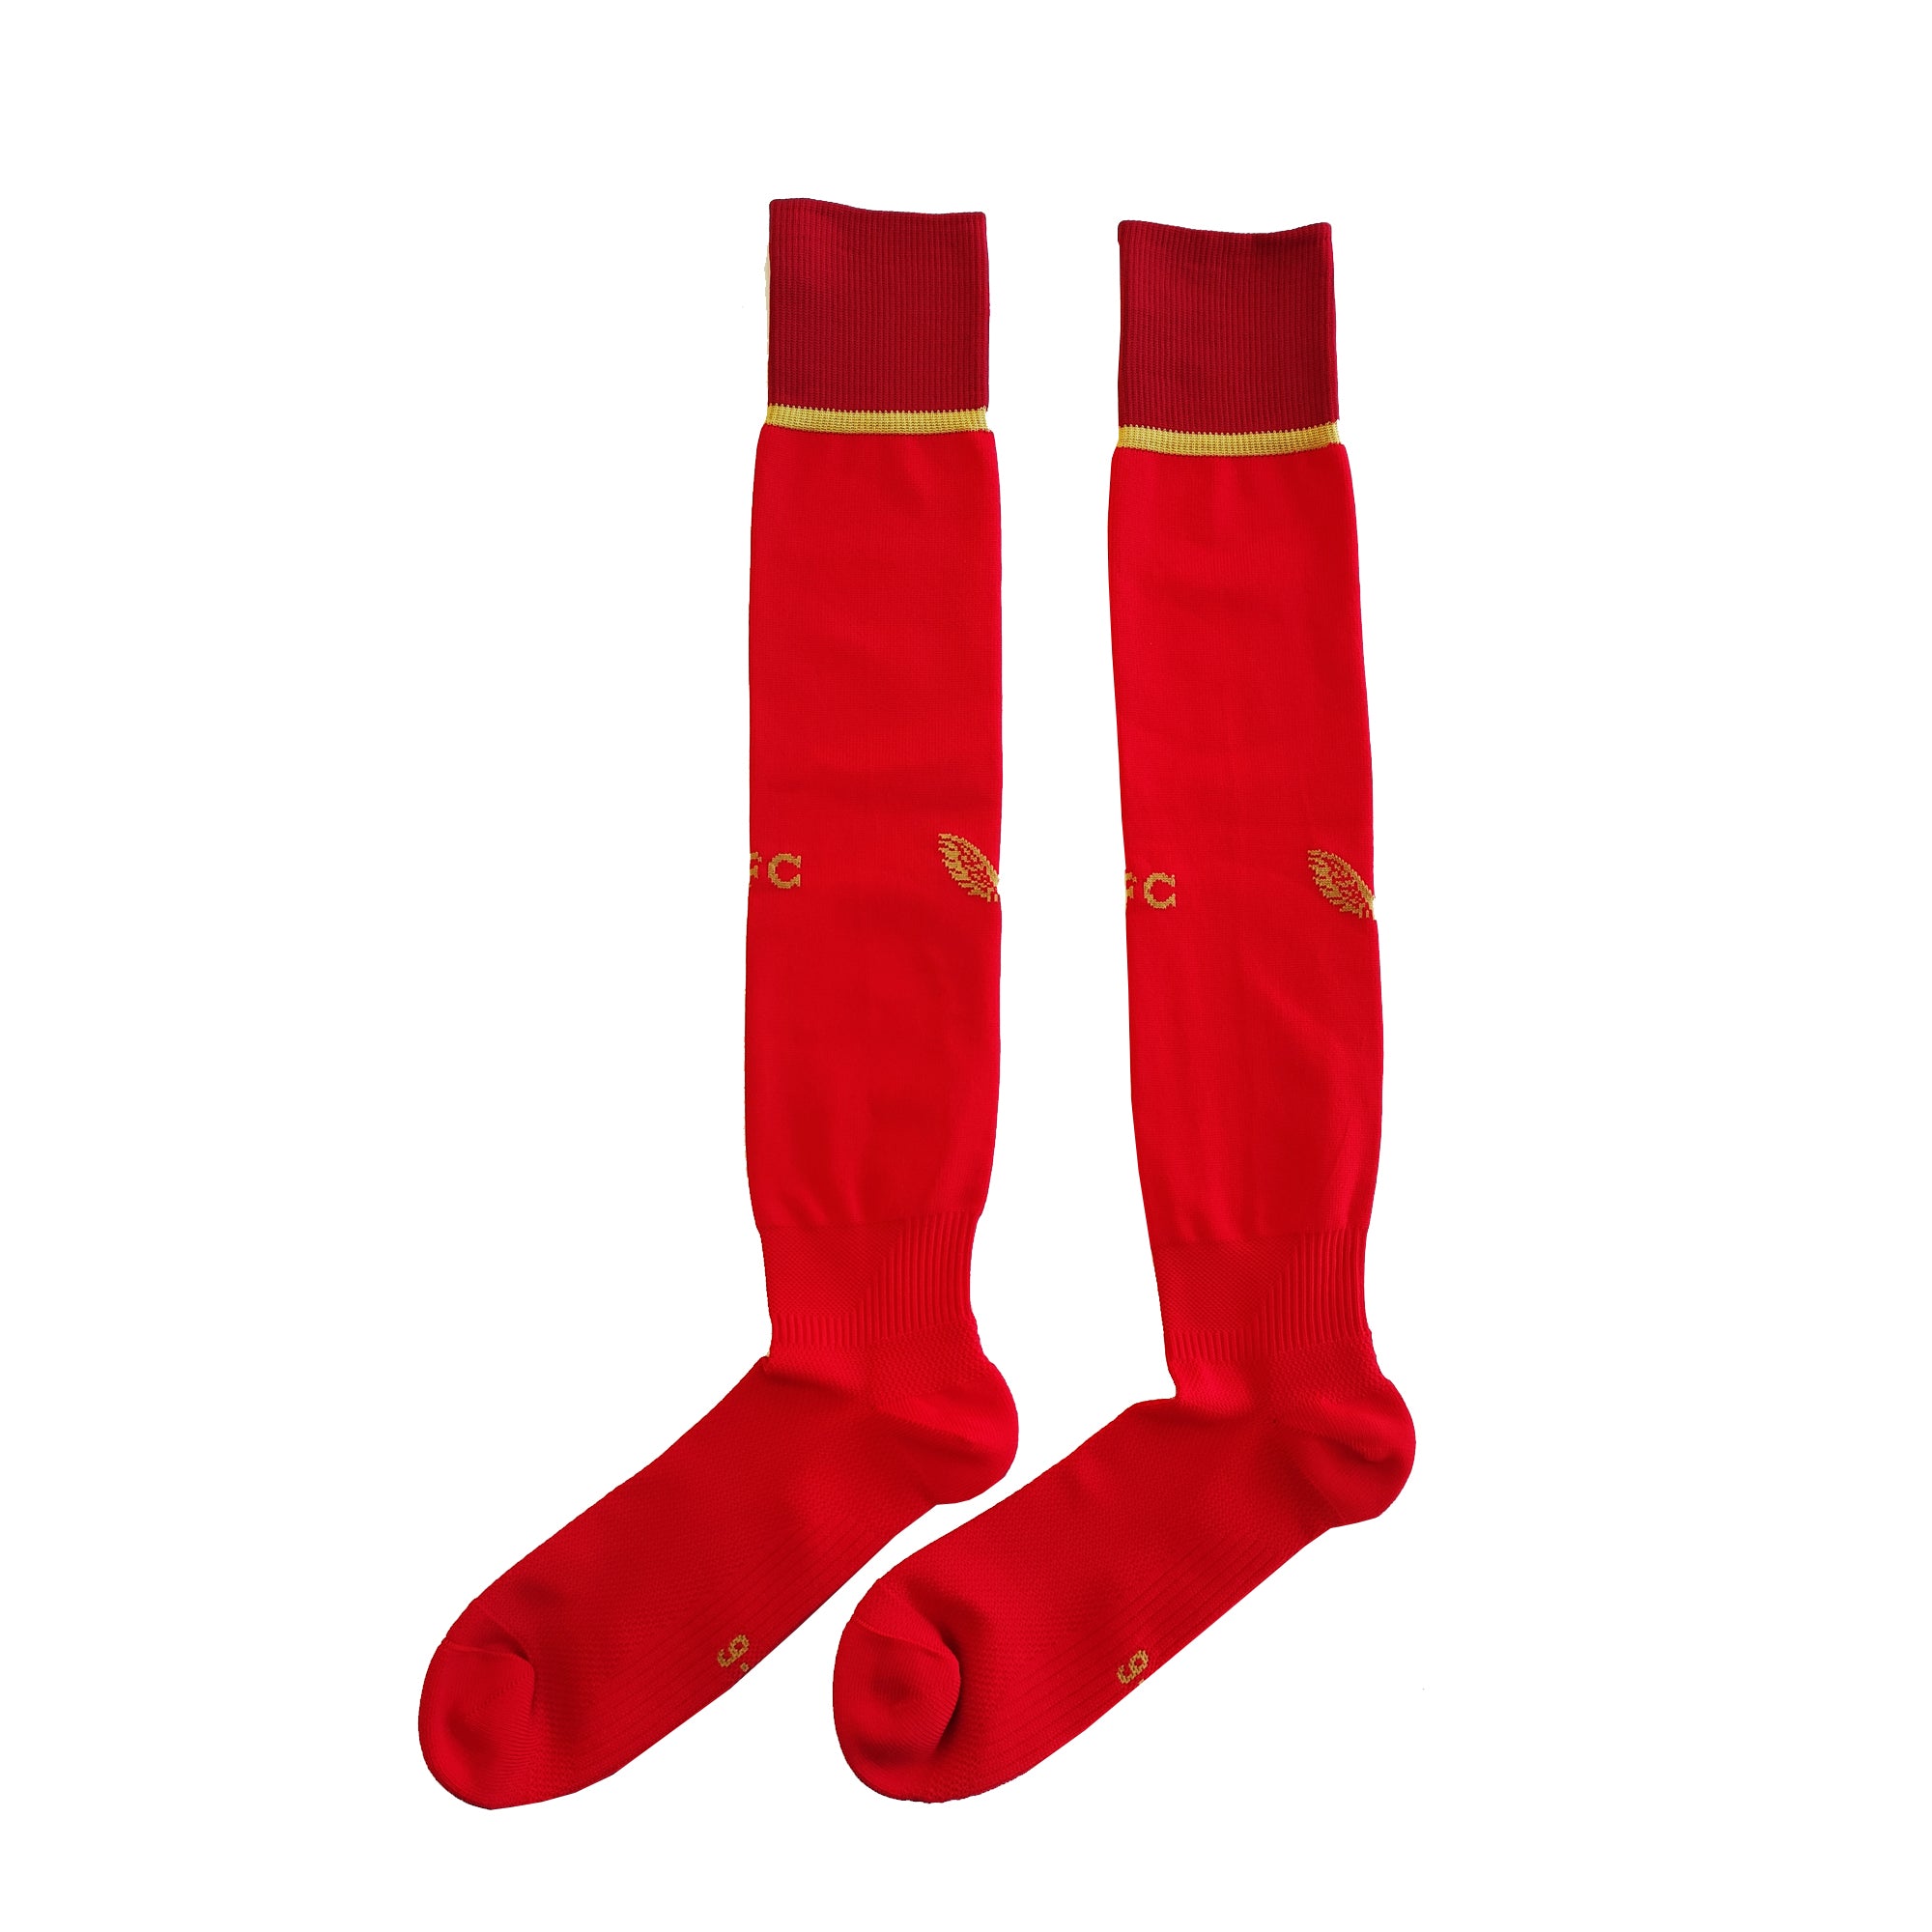 Medias Rojas (Red Socks) (Spanish and English Edition)